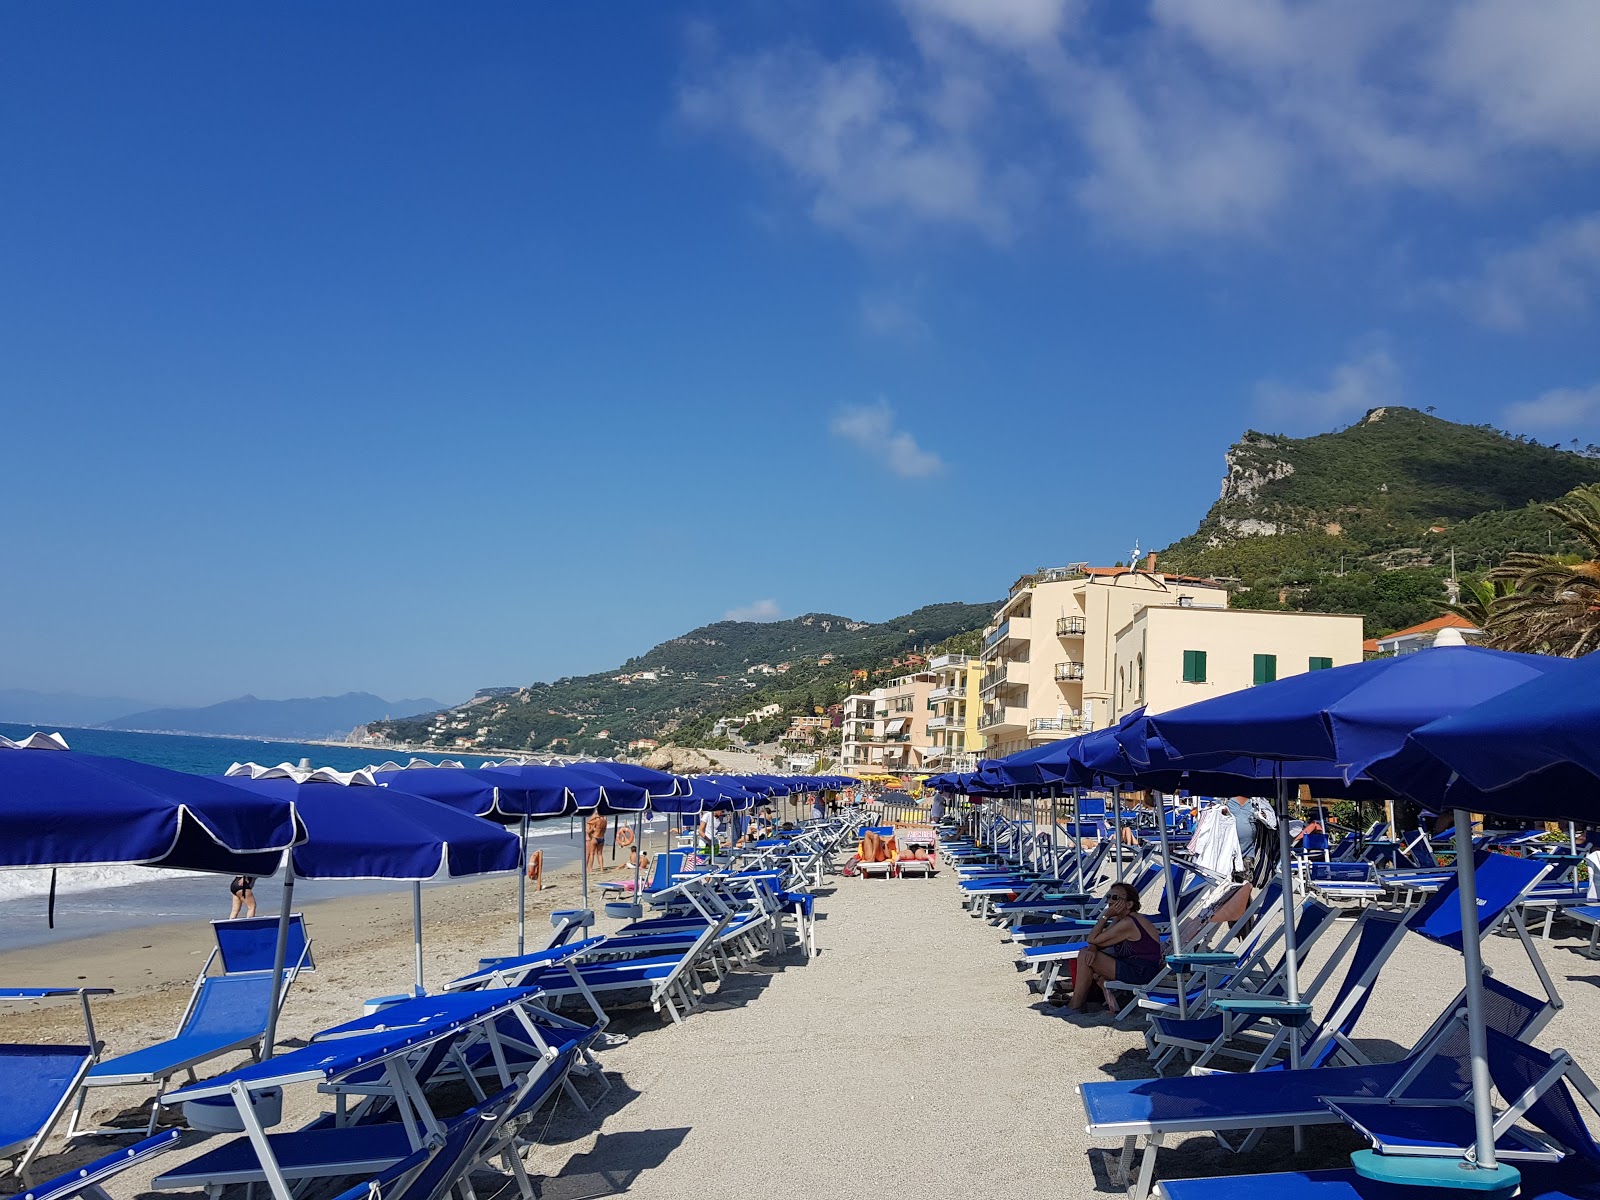 Spiaggia libera di Varigotti的照片 背靠悬崖